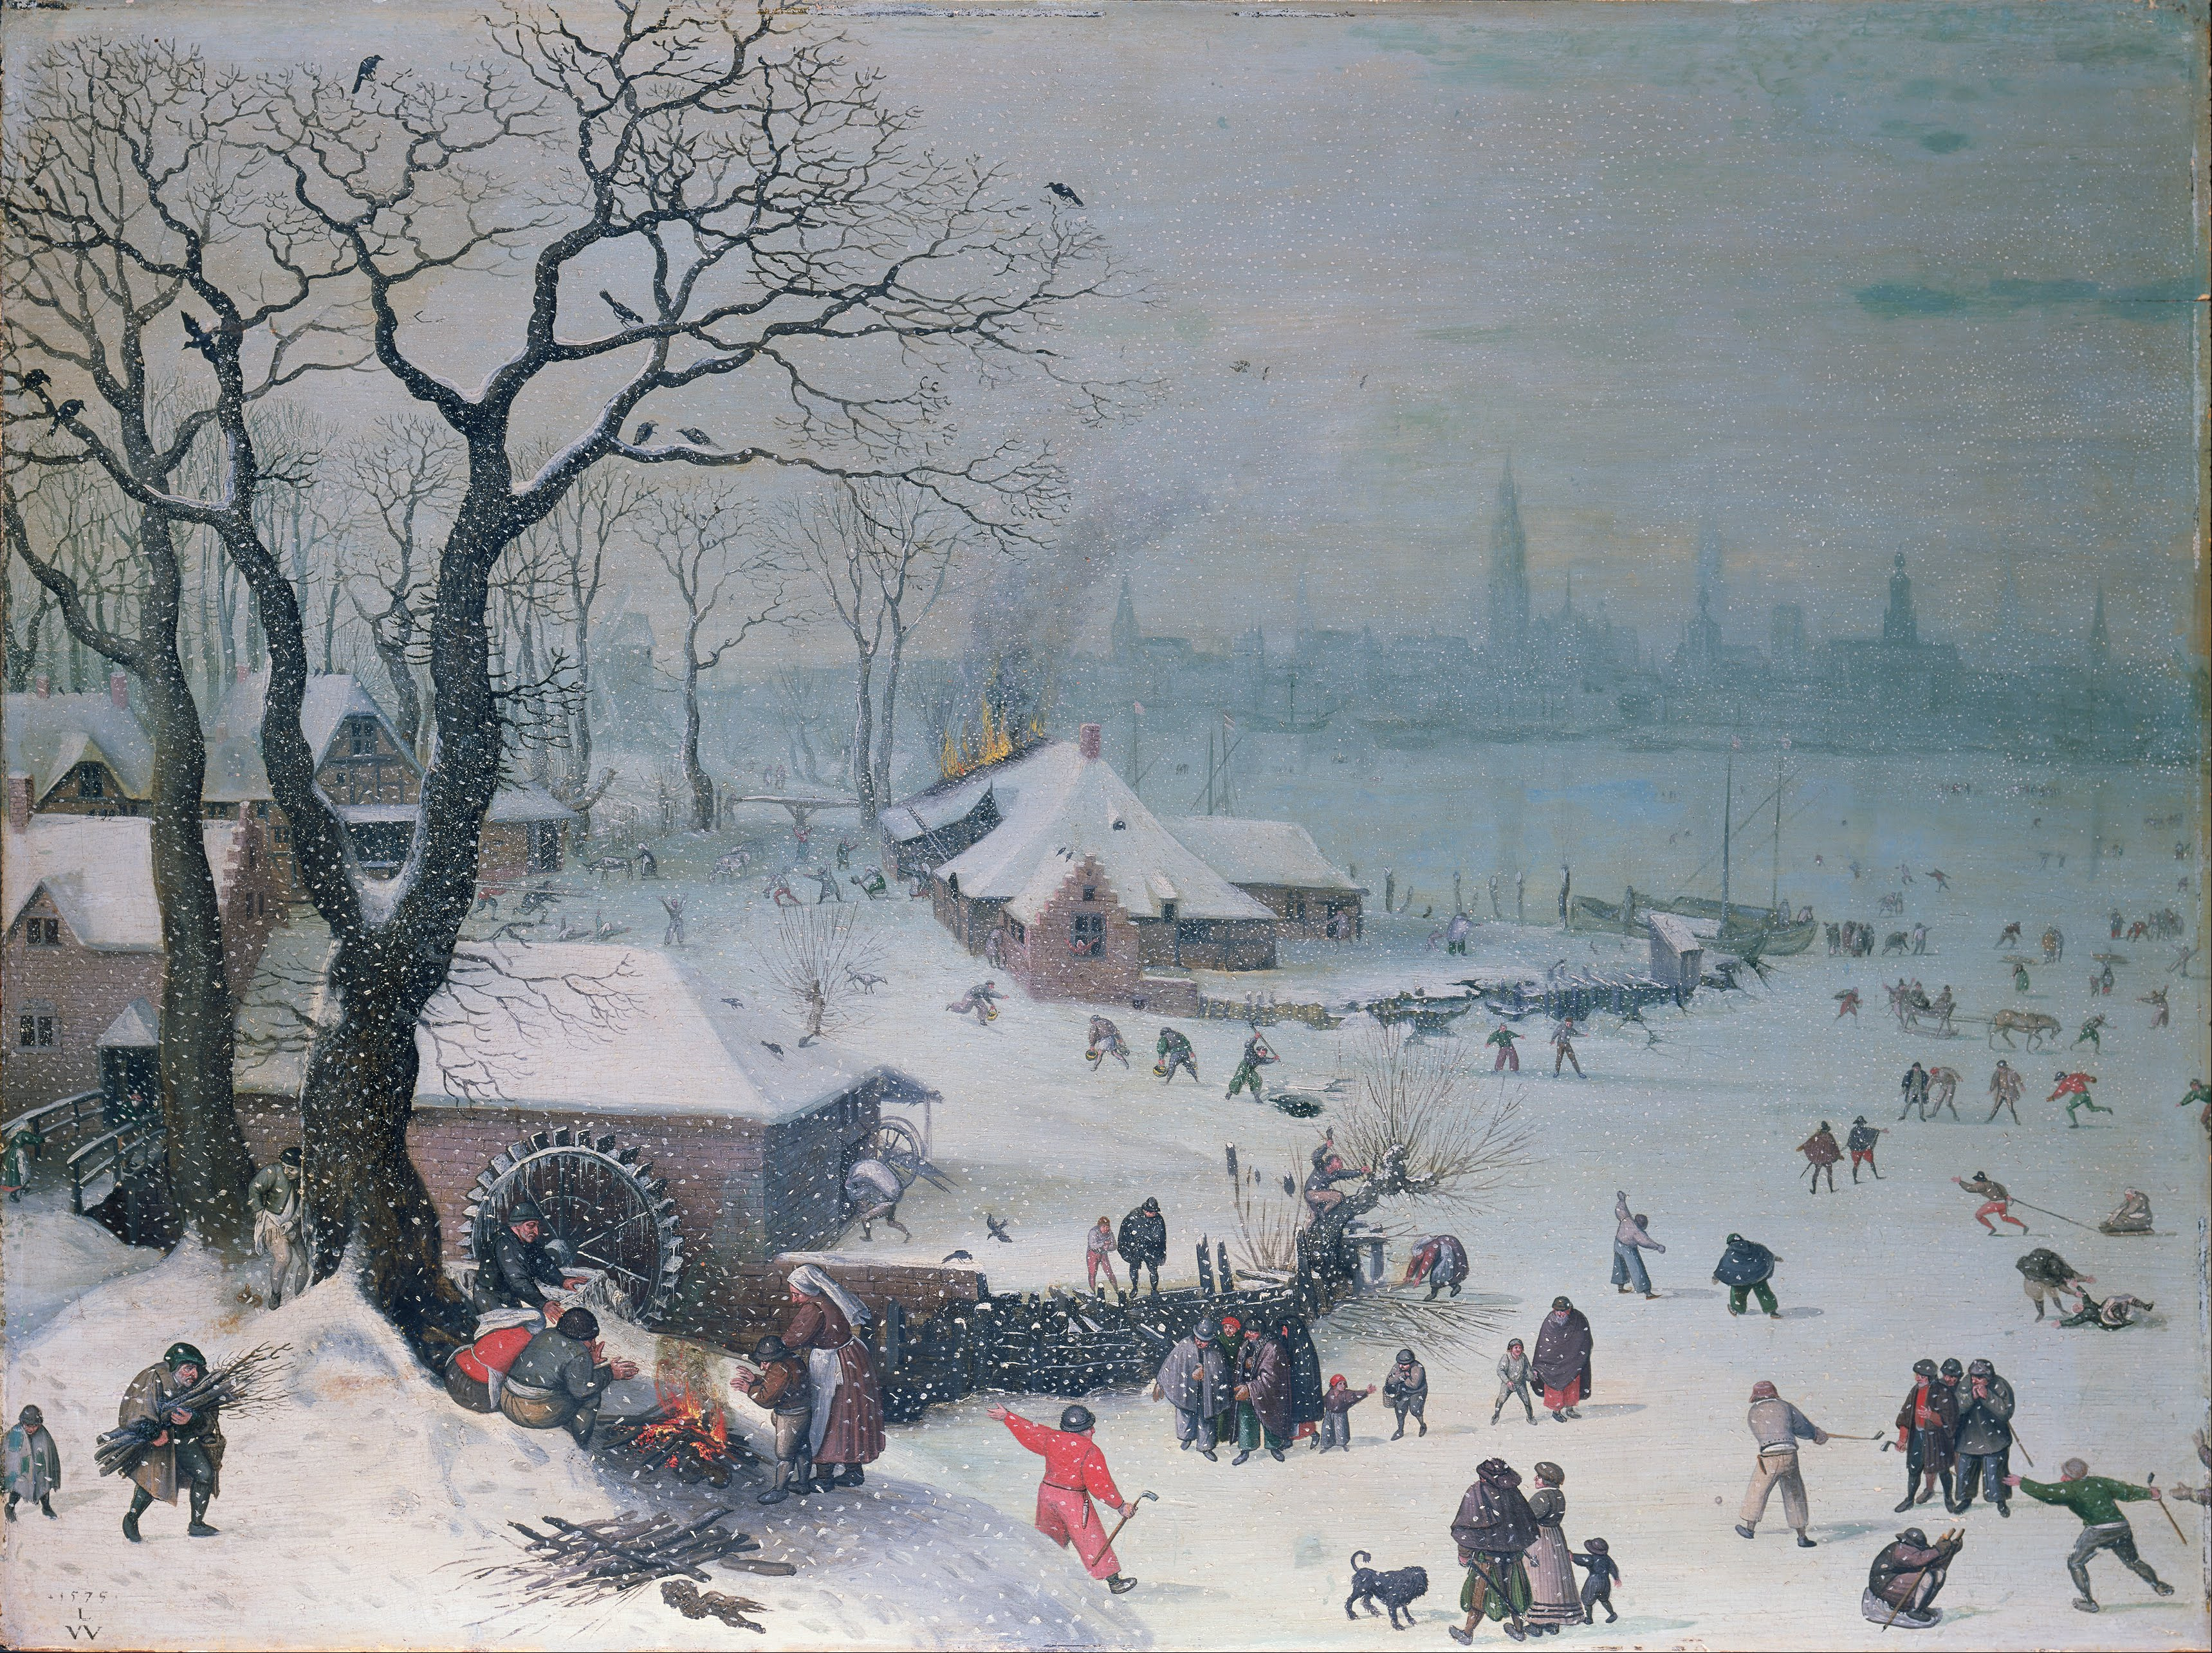 Winter Landscape with Snowfall near Antwerp by Lucas van Valckenborch - 1575 - 61 x 82 cm Städel Museum